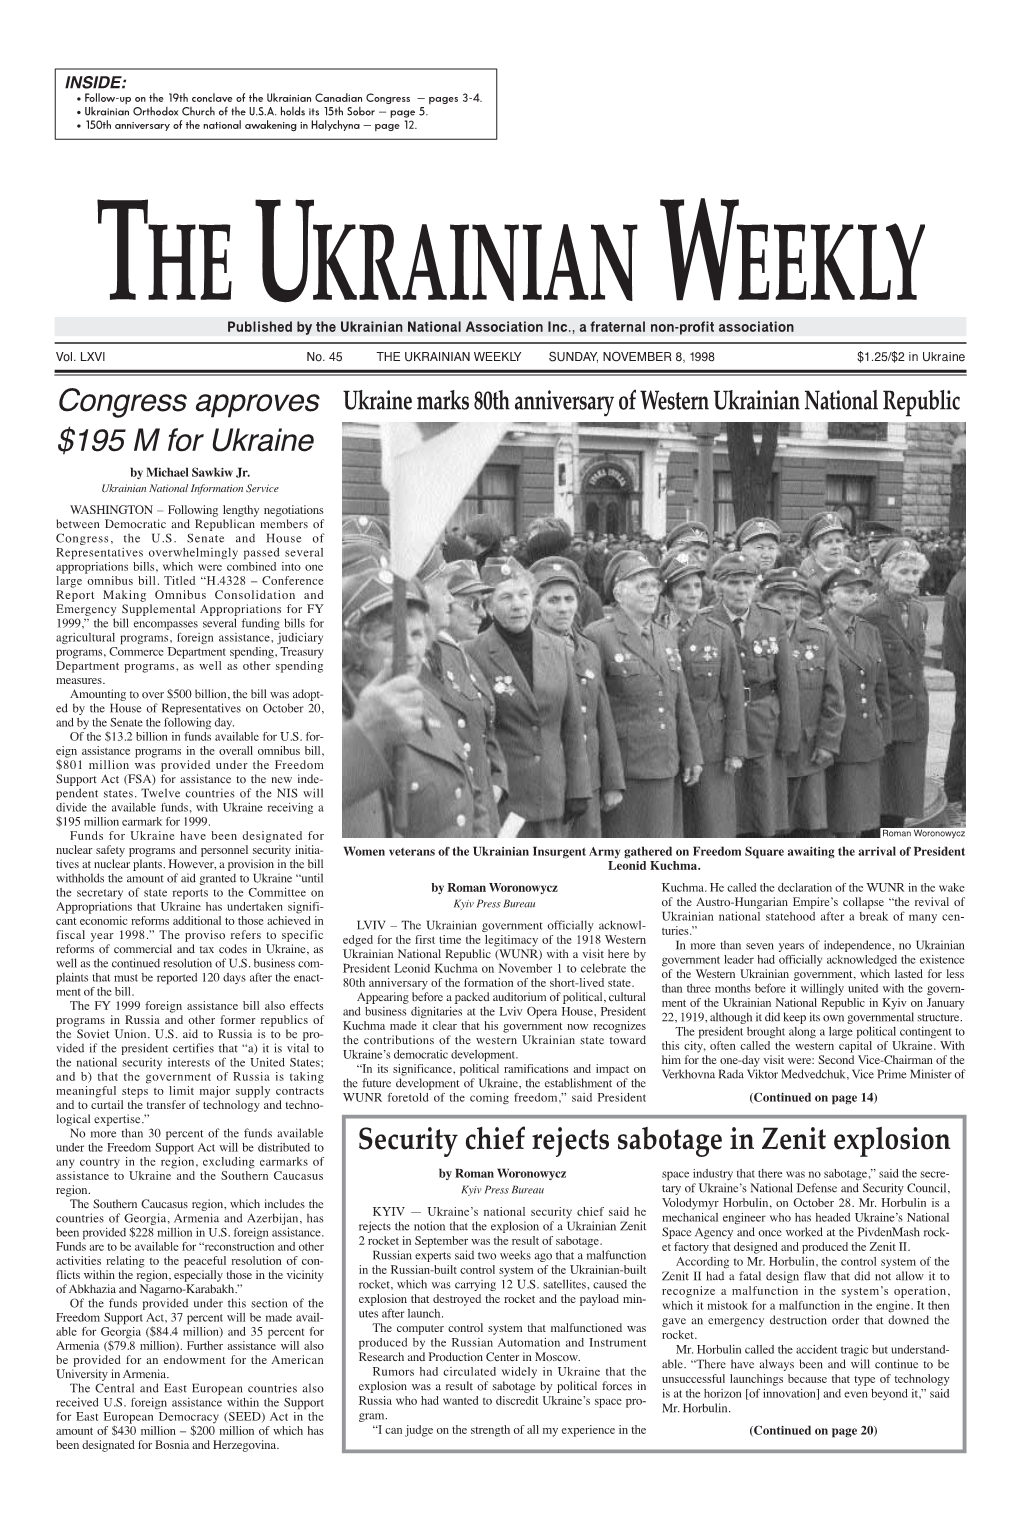 The Ukrainian Weekly 1998, No.45